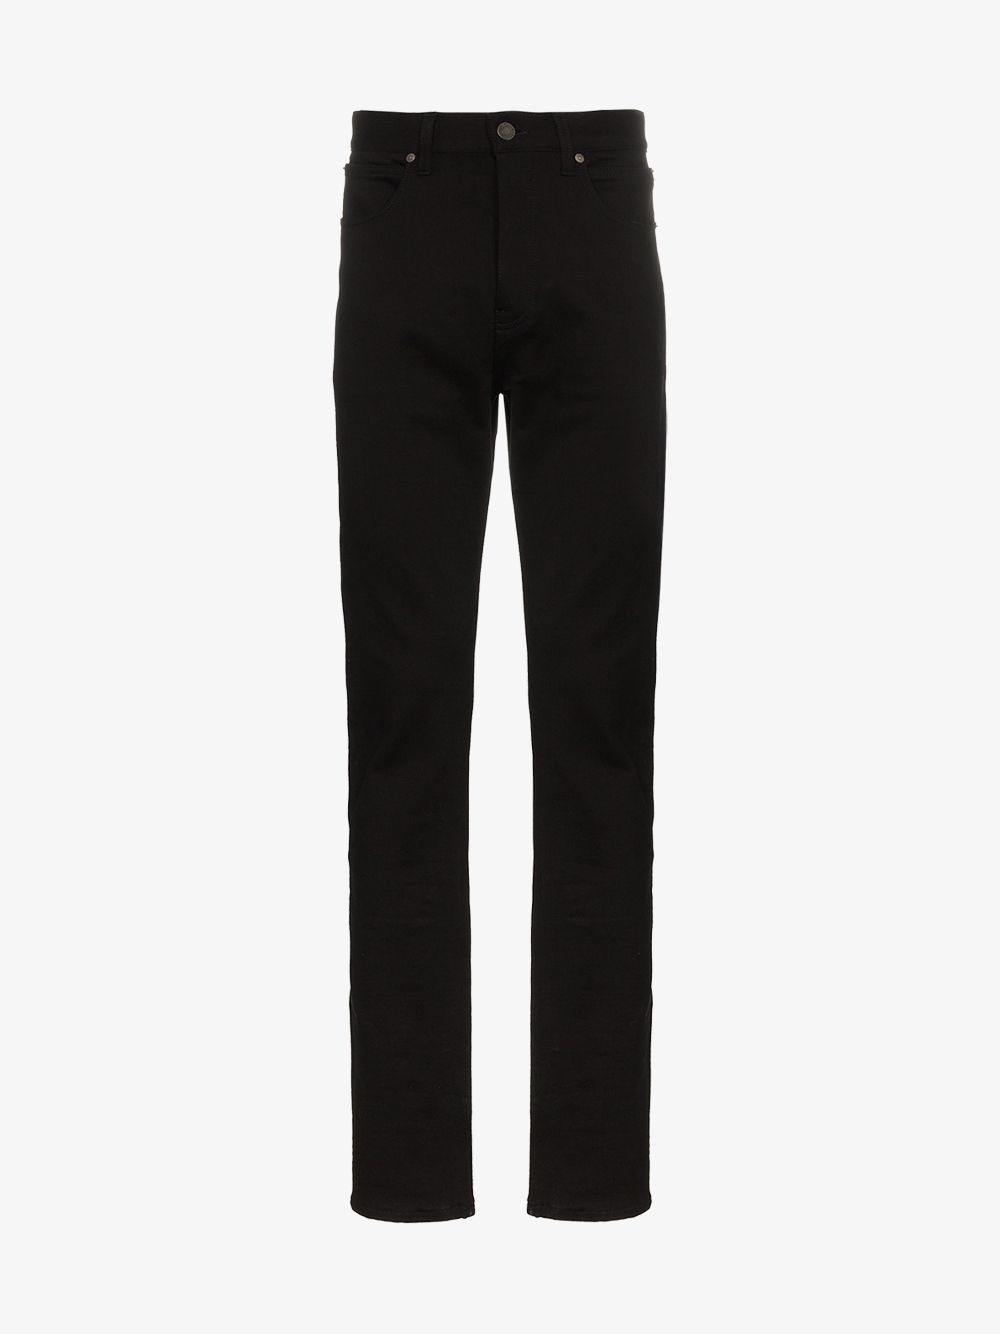 Calvin Klein Jeans Slim cotton black denim jeans | Browns Fashion